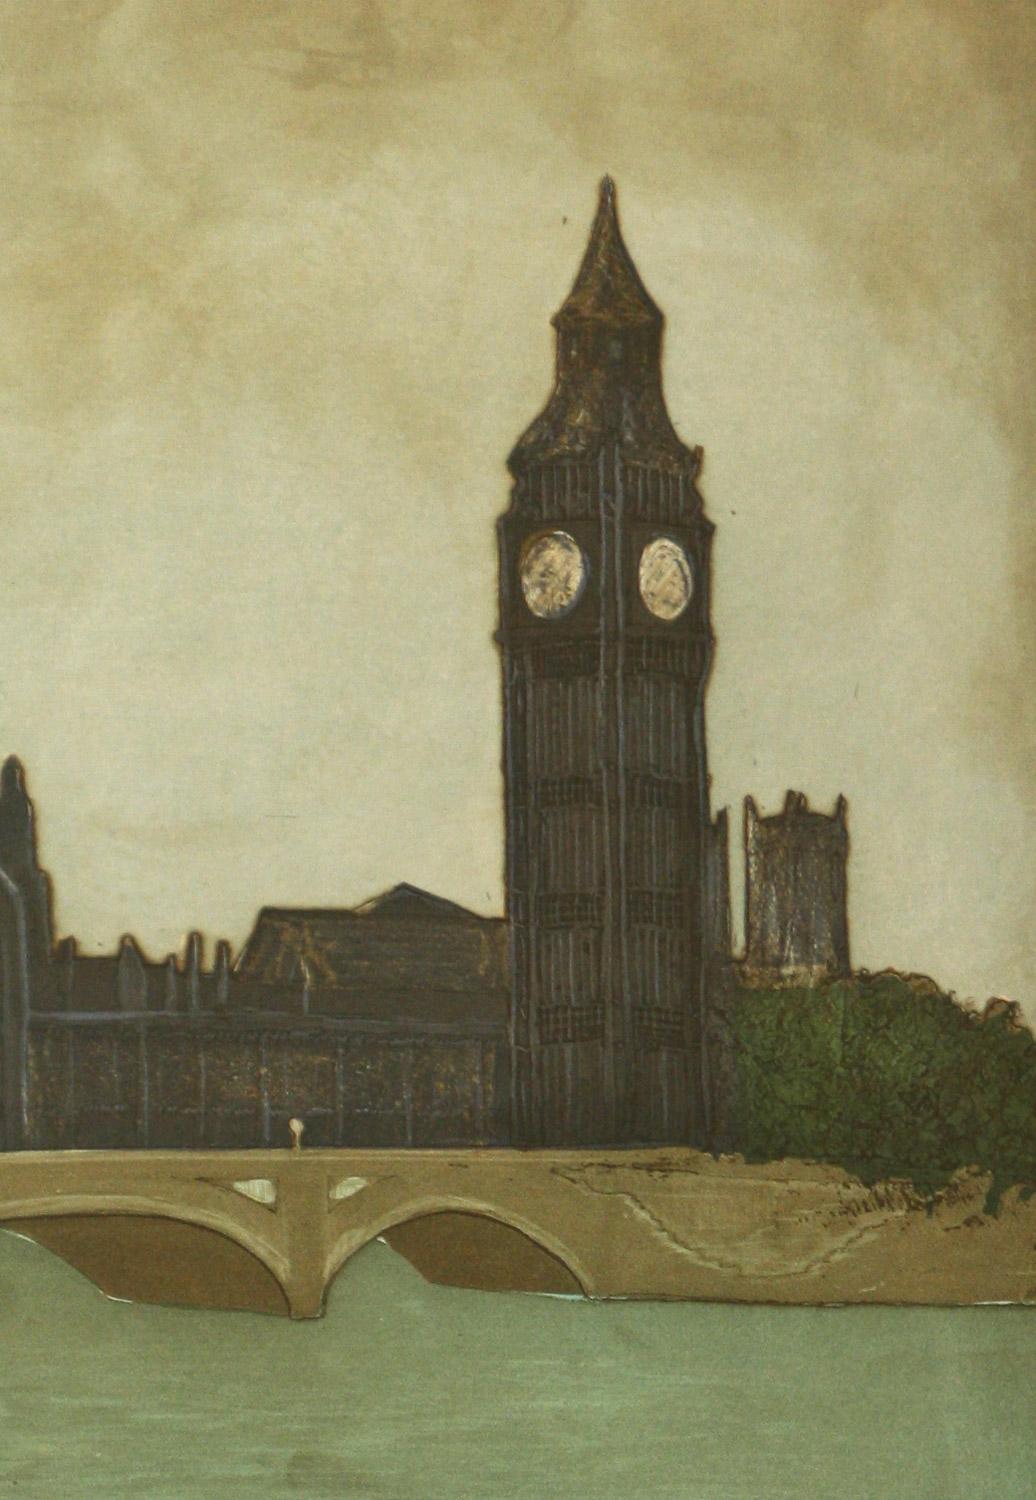 London, England original signed original aquatint etching by J.J. Regal - Print by J. J. Regal